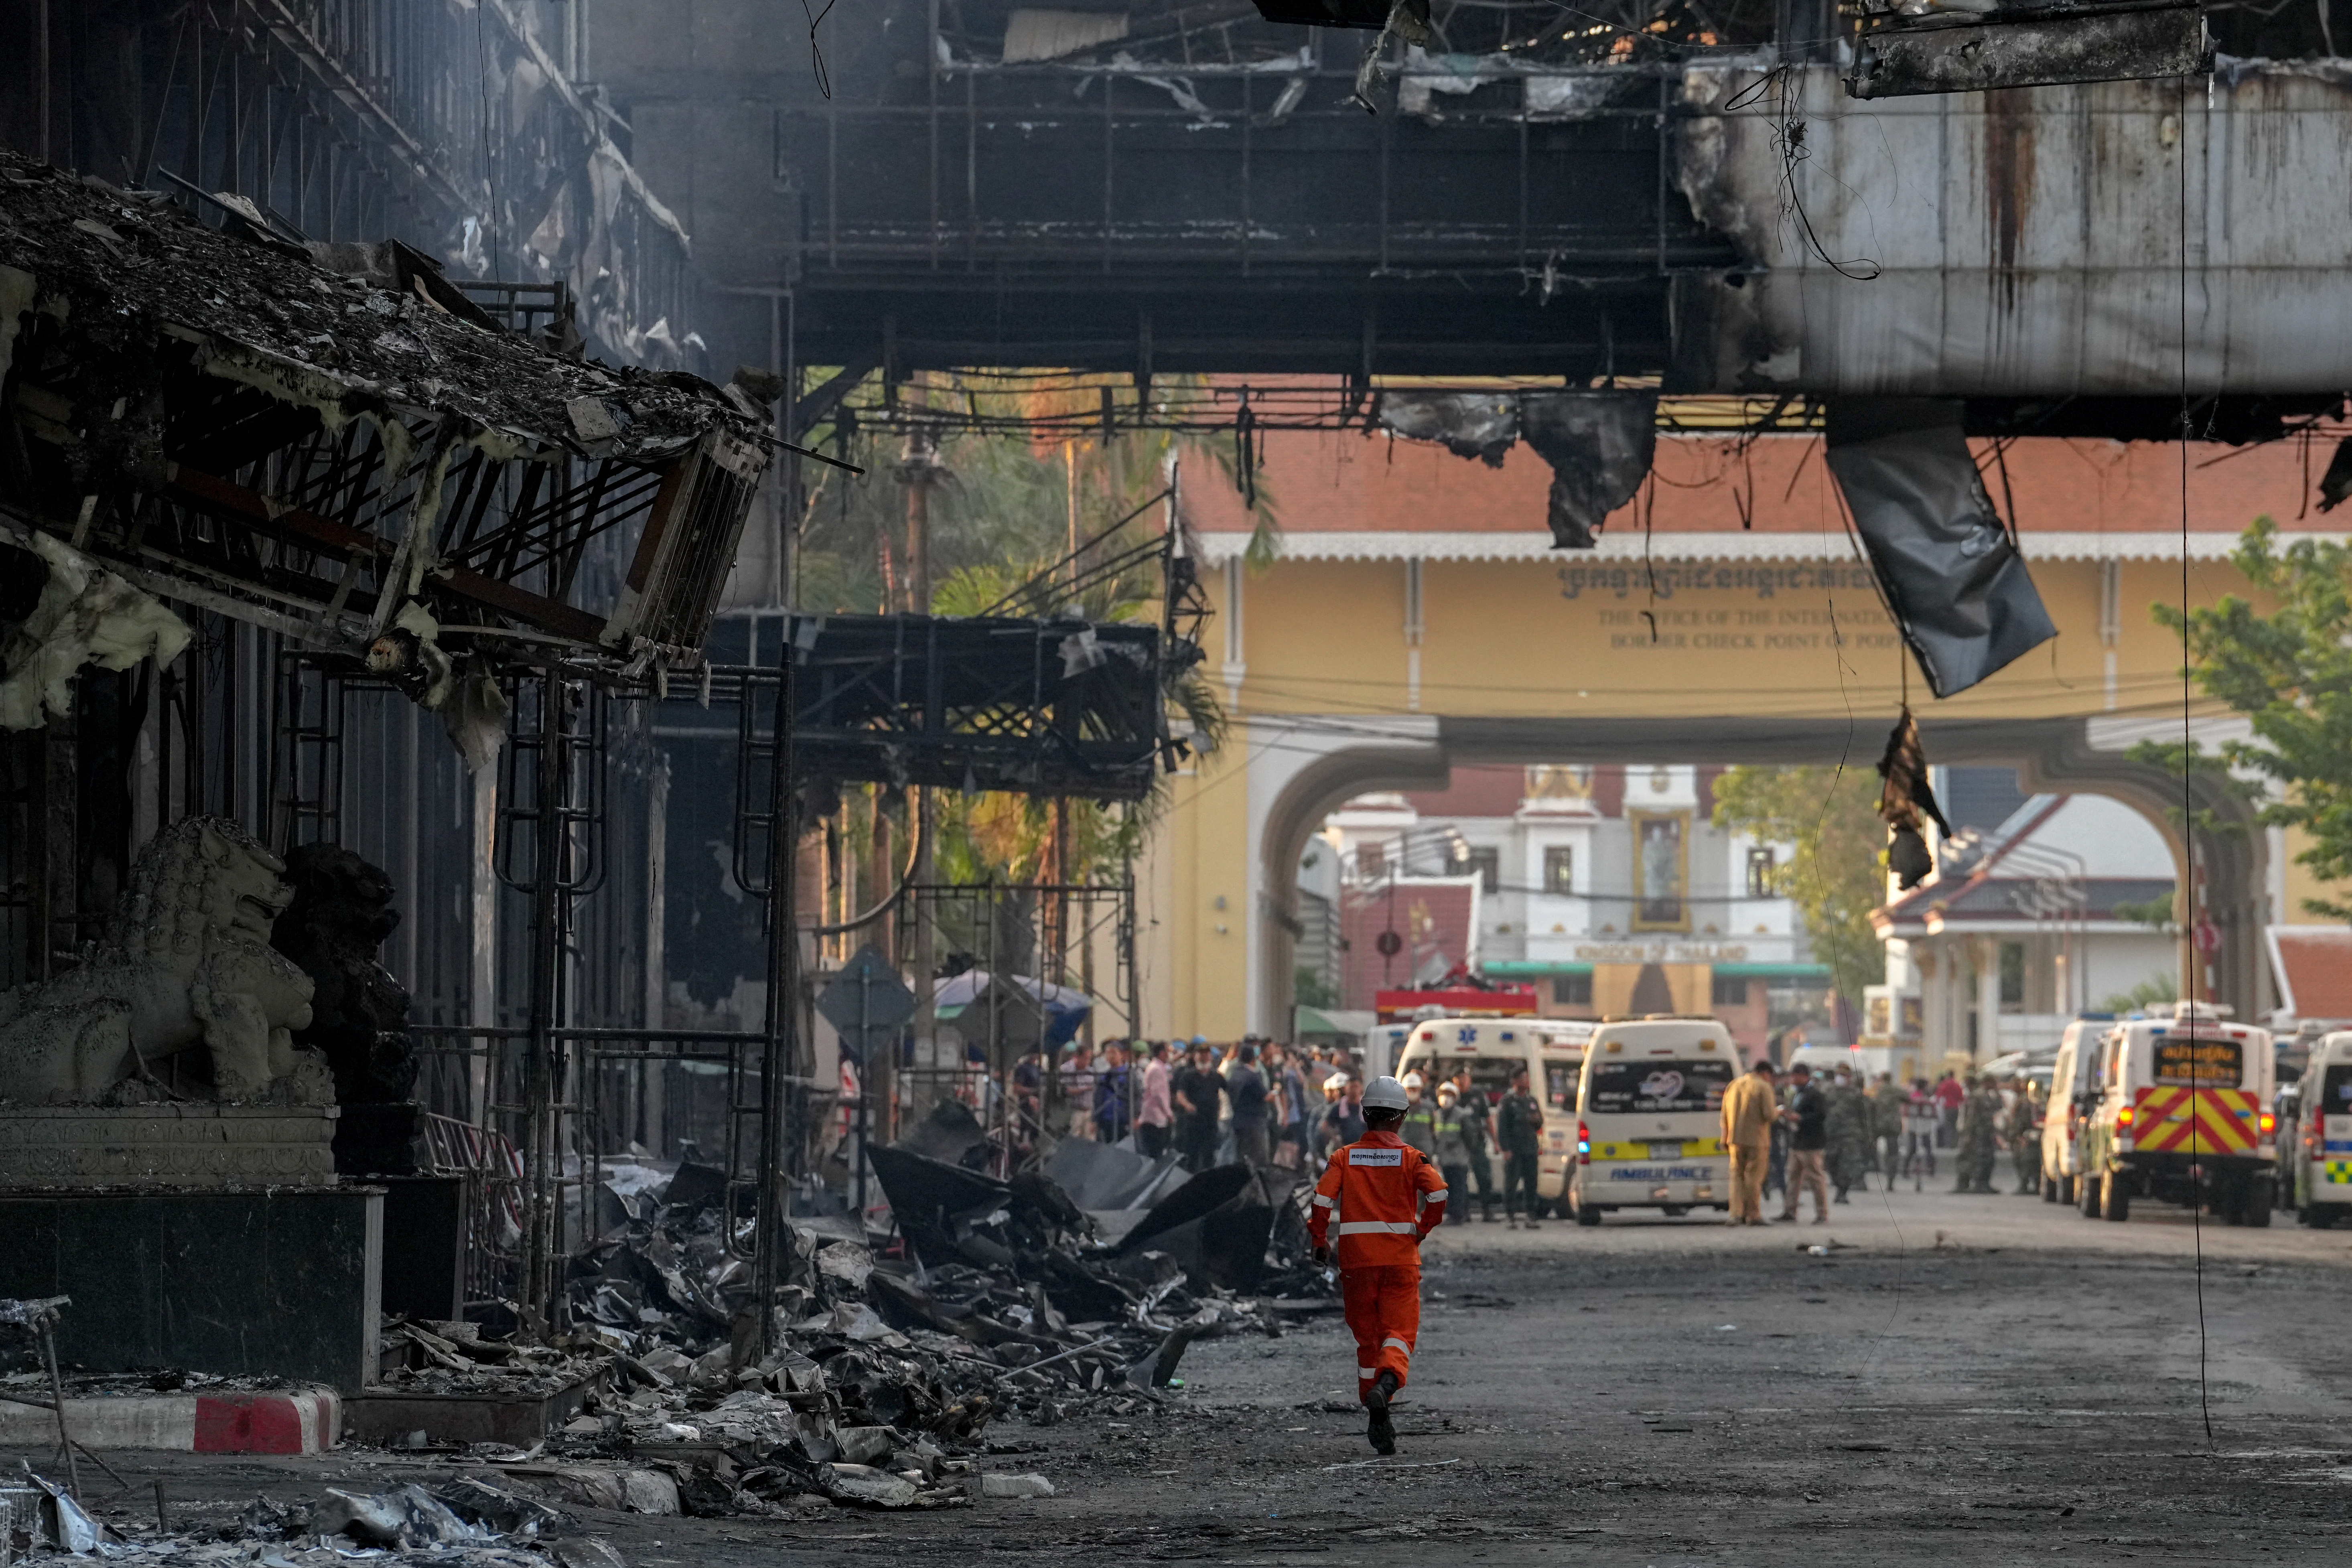 Cambodian casino fire kills 10, many feared trapped